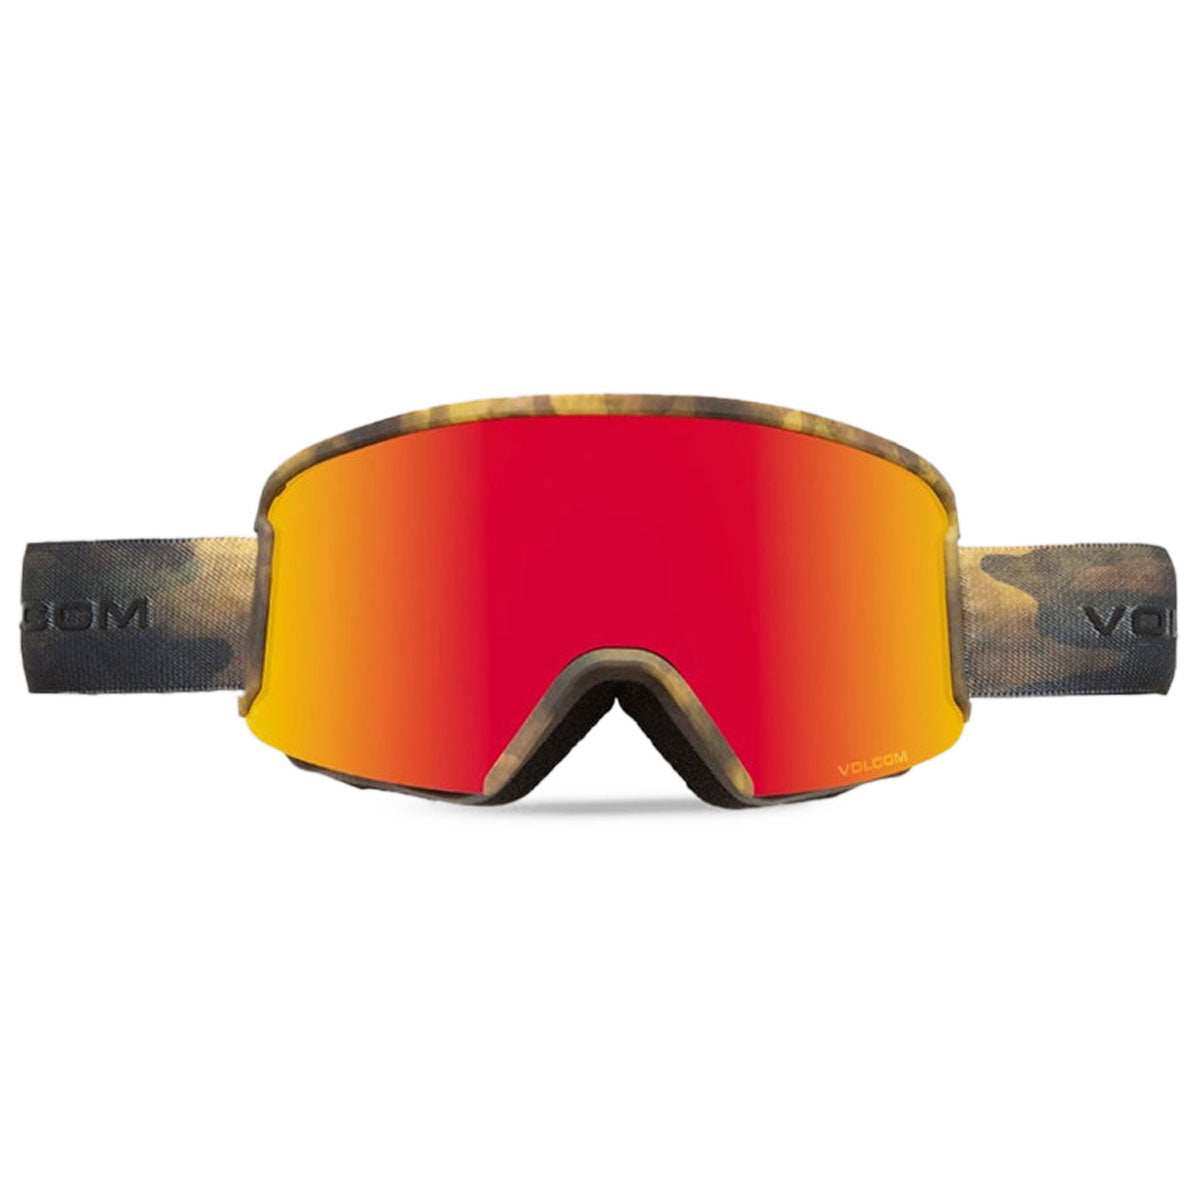 Volcom Garden Snowboard Goggles - Camo/Red Chrome image 1